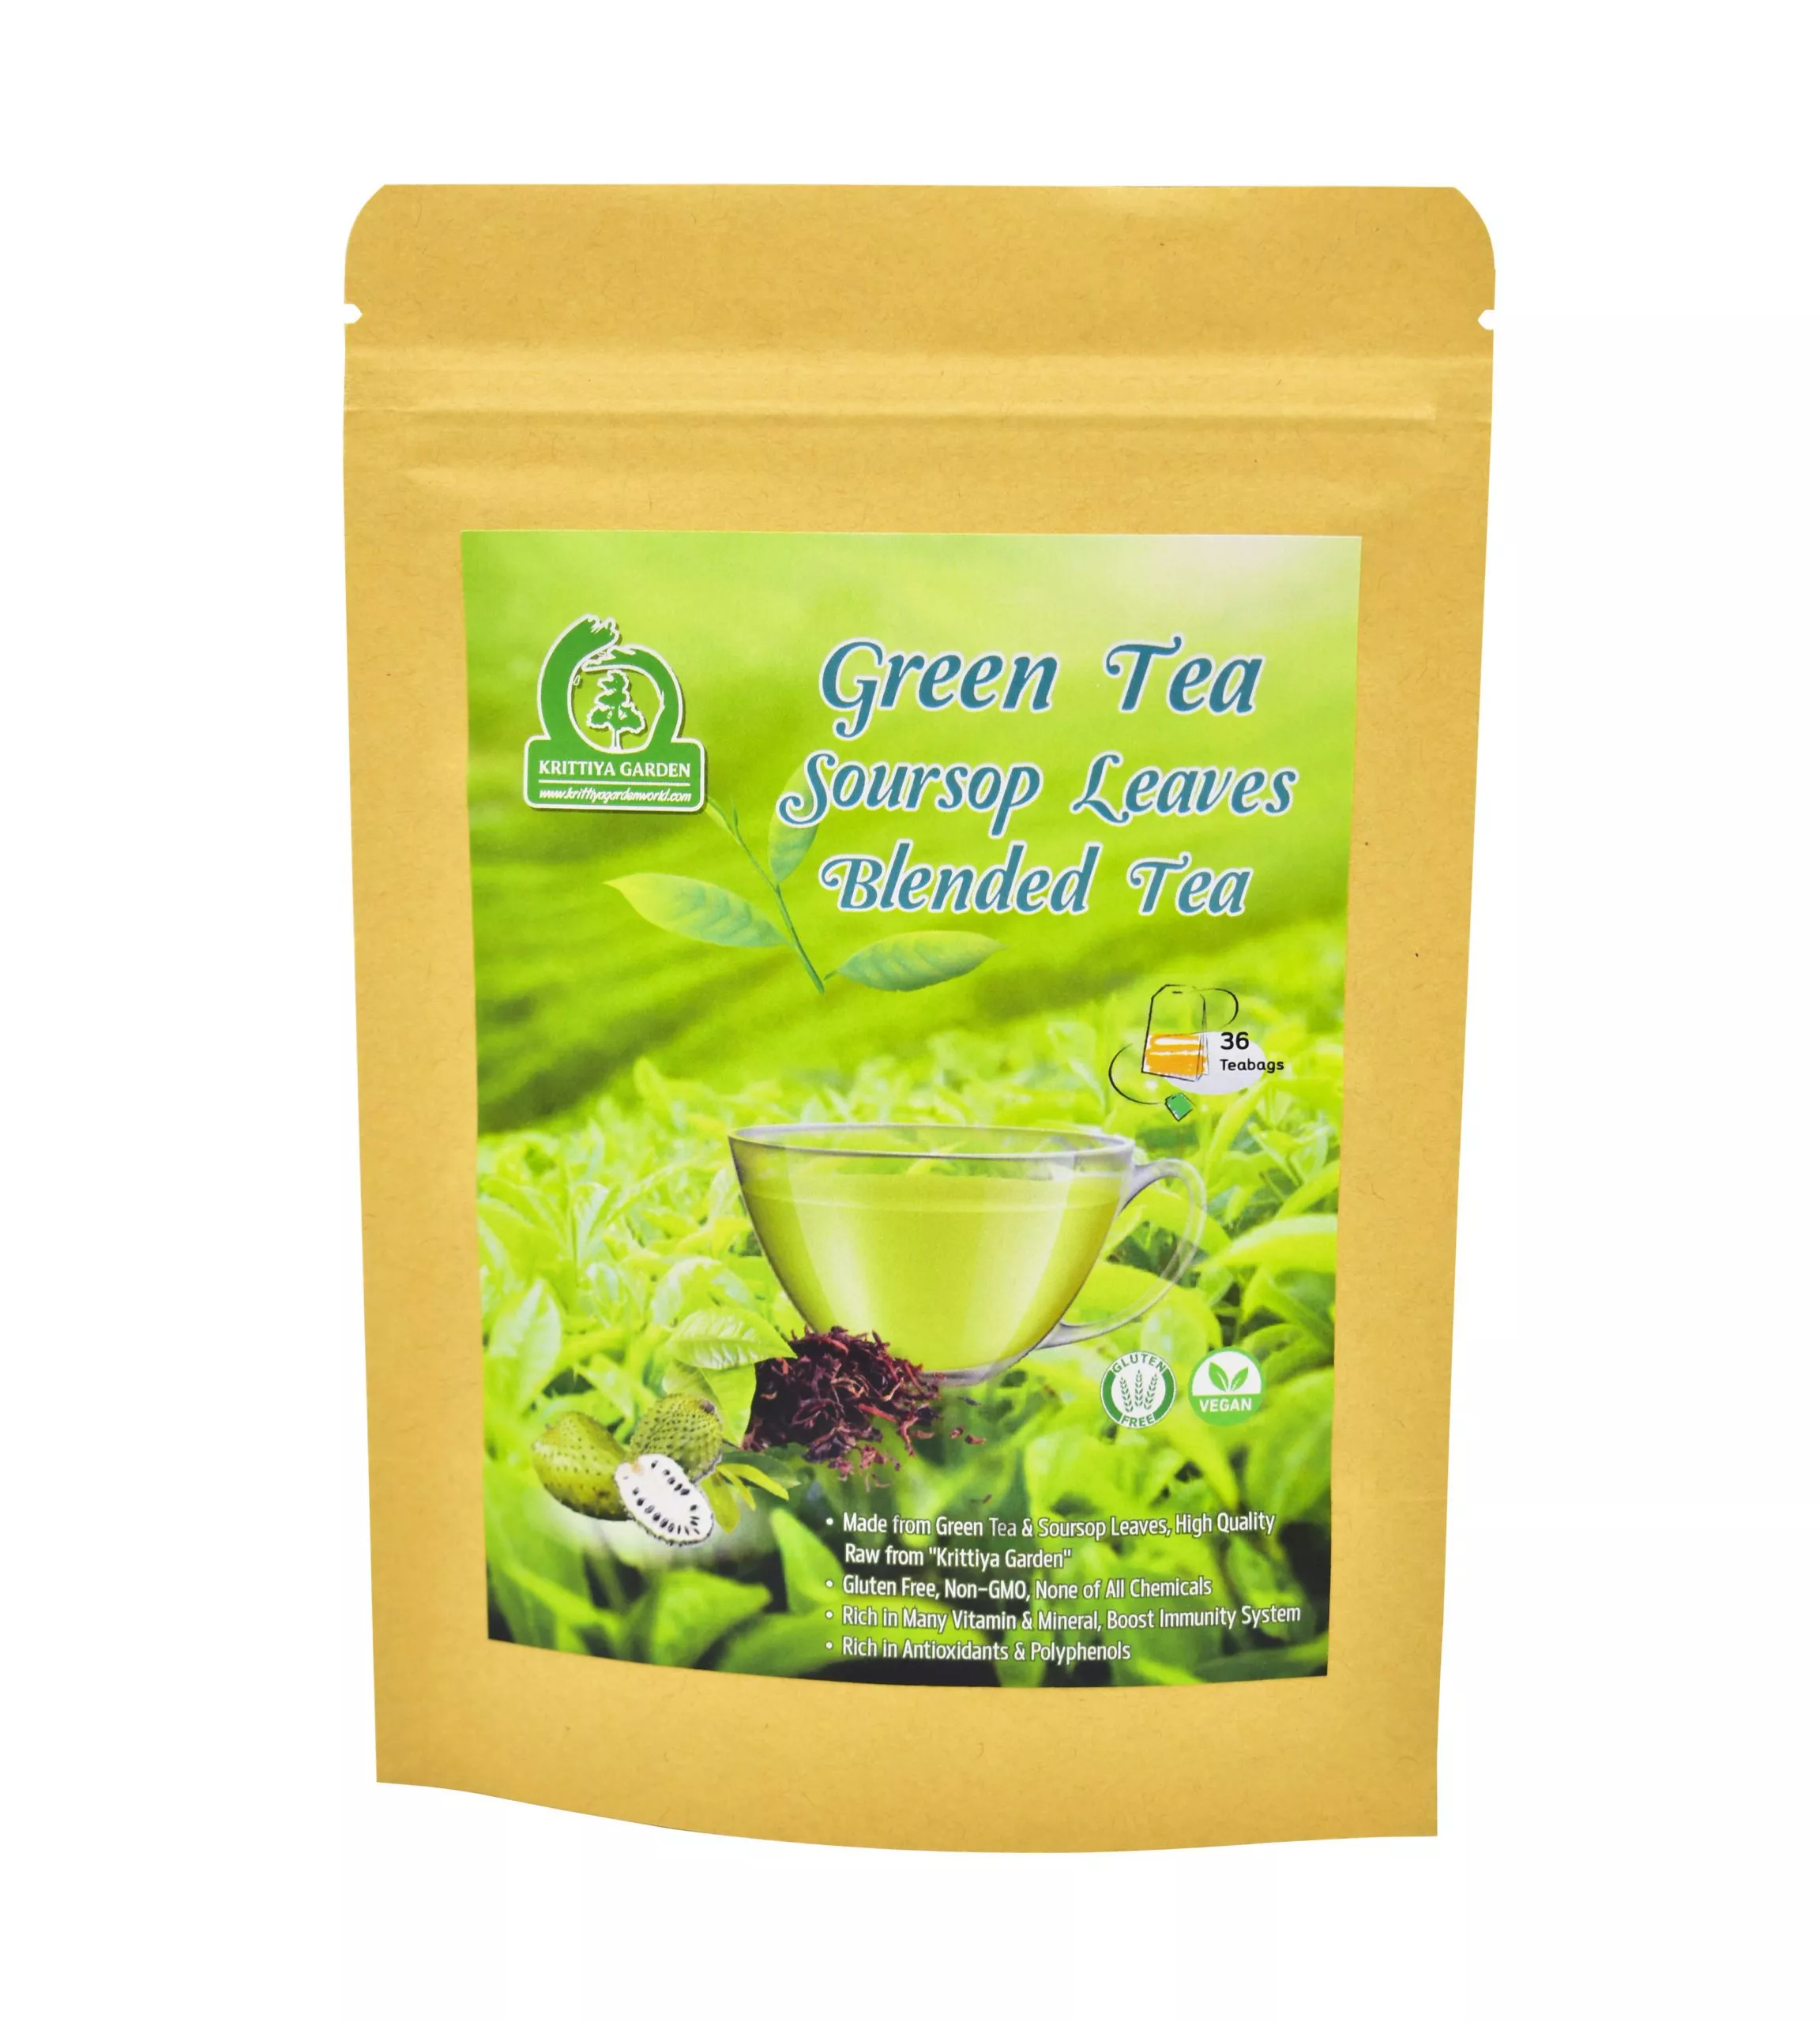 Green Tea Soursop Leaves Blended Tea 36-Teabags (1.9oz) X2 Double ...